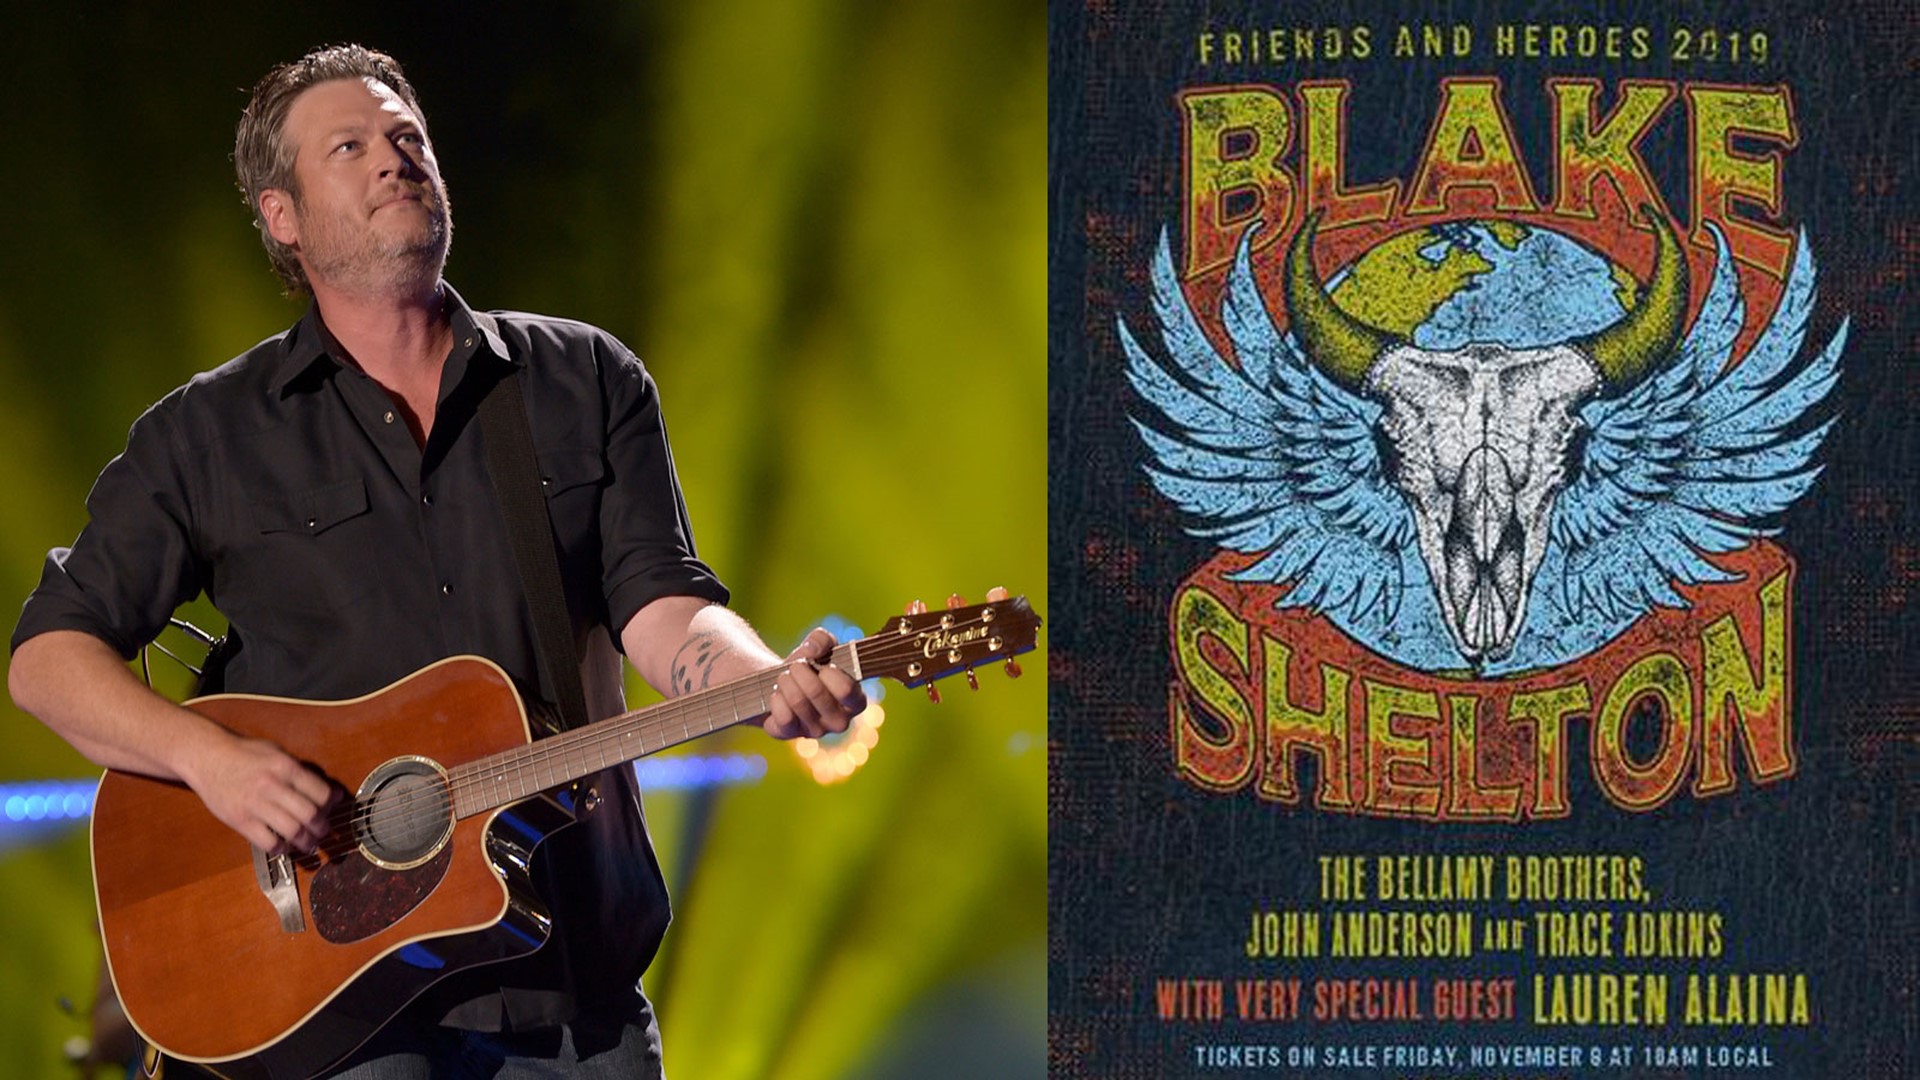 Blake Shelton brings 'Friends & Heroes' tour to Louisville in 2019